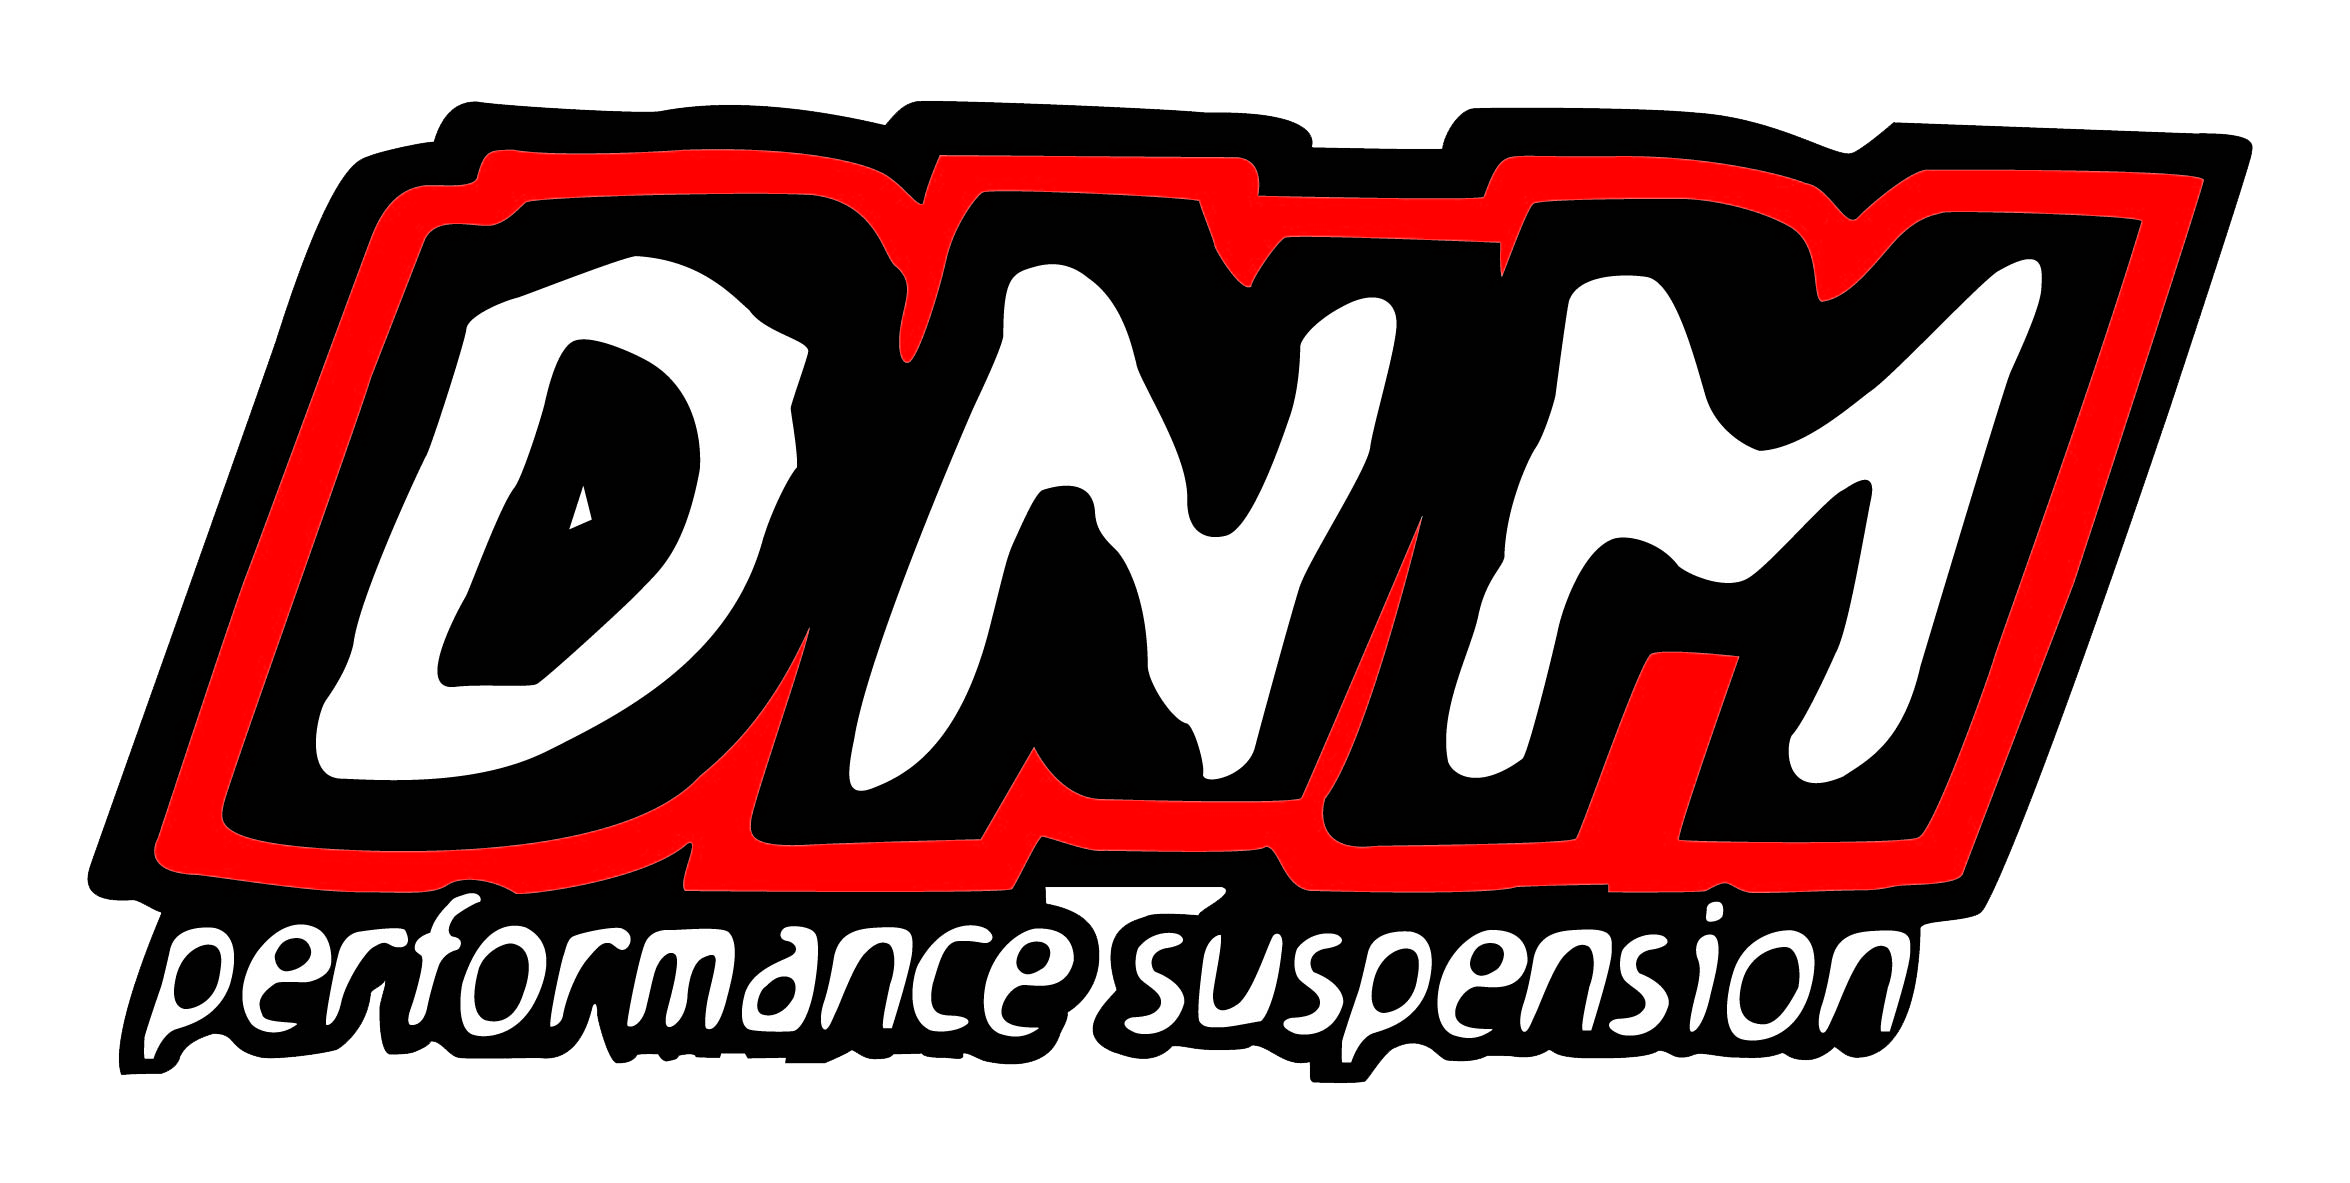 DNM Logo